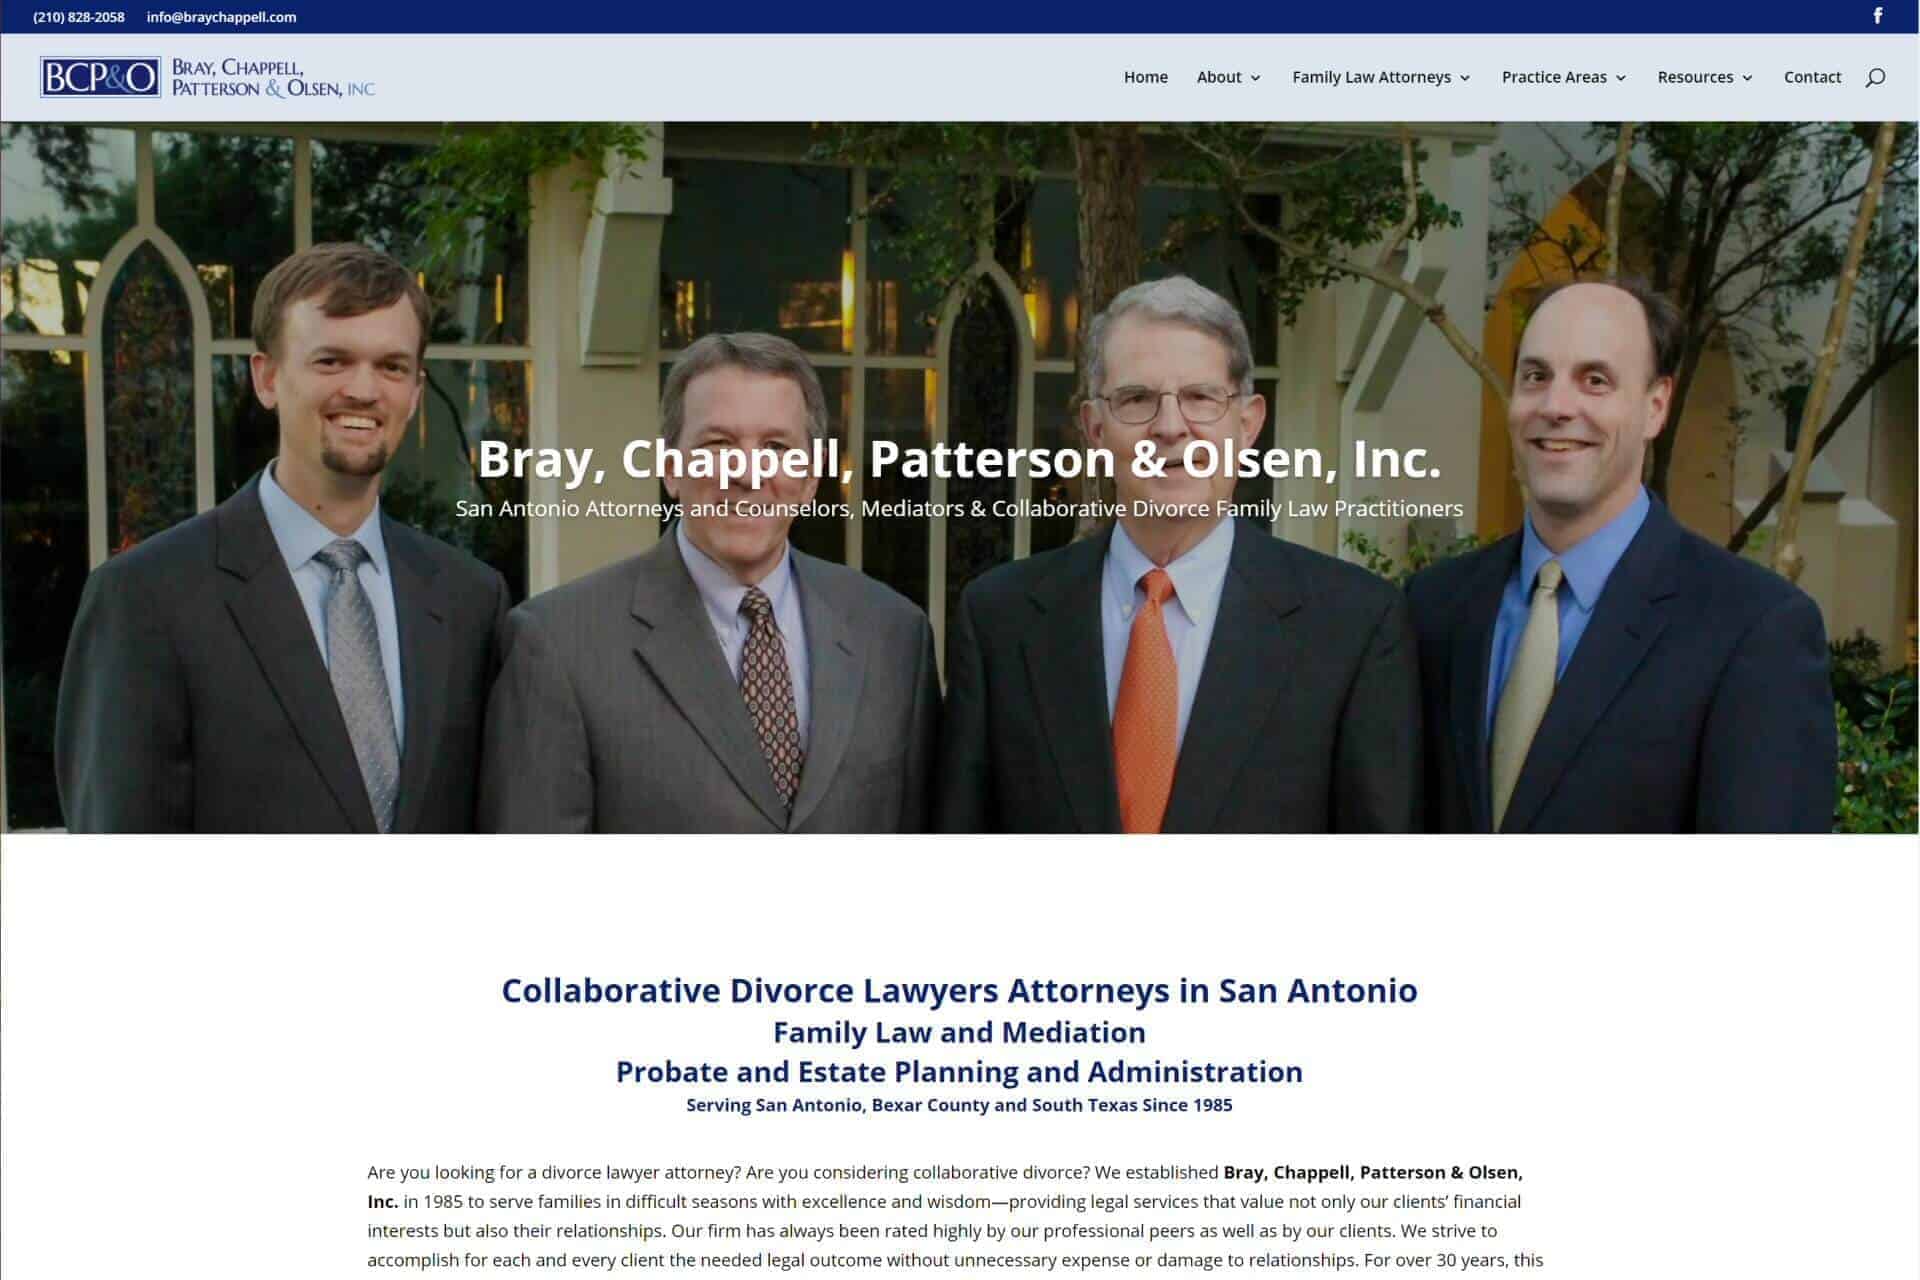 Bray, Chappell, Patterson & Olsen, Inc.